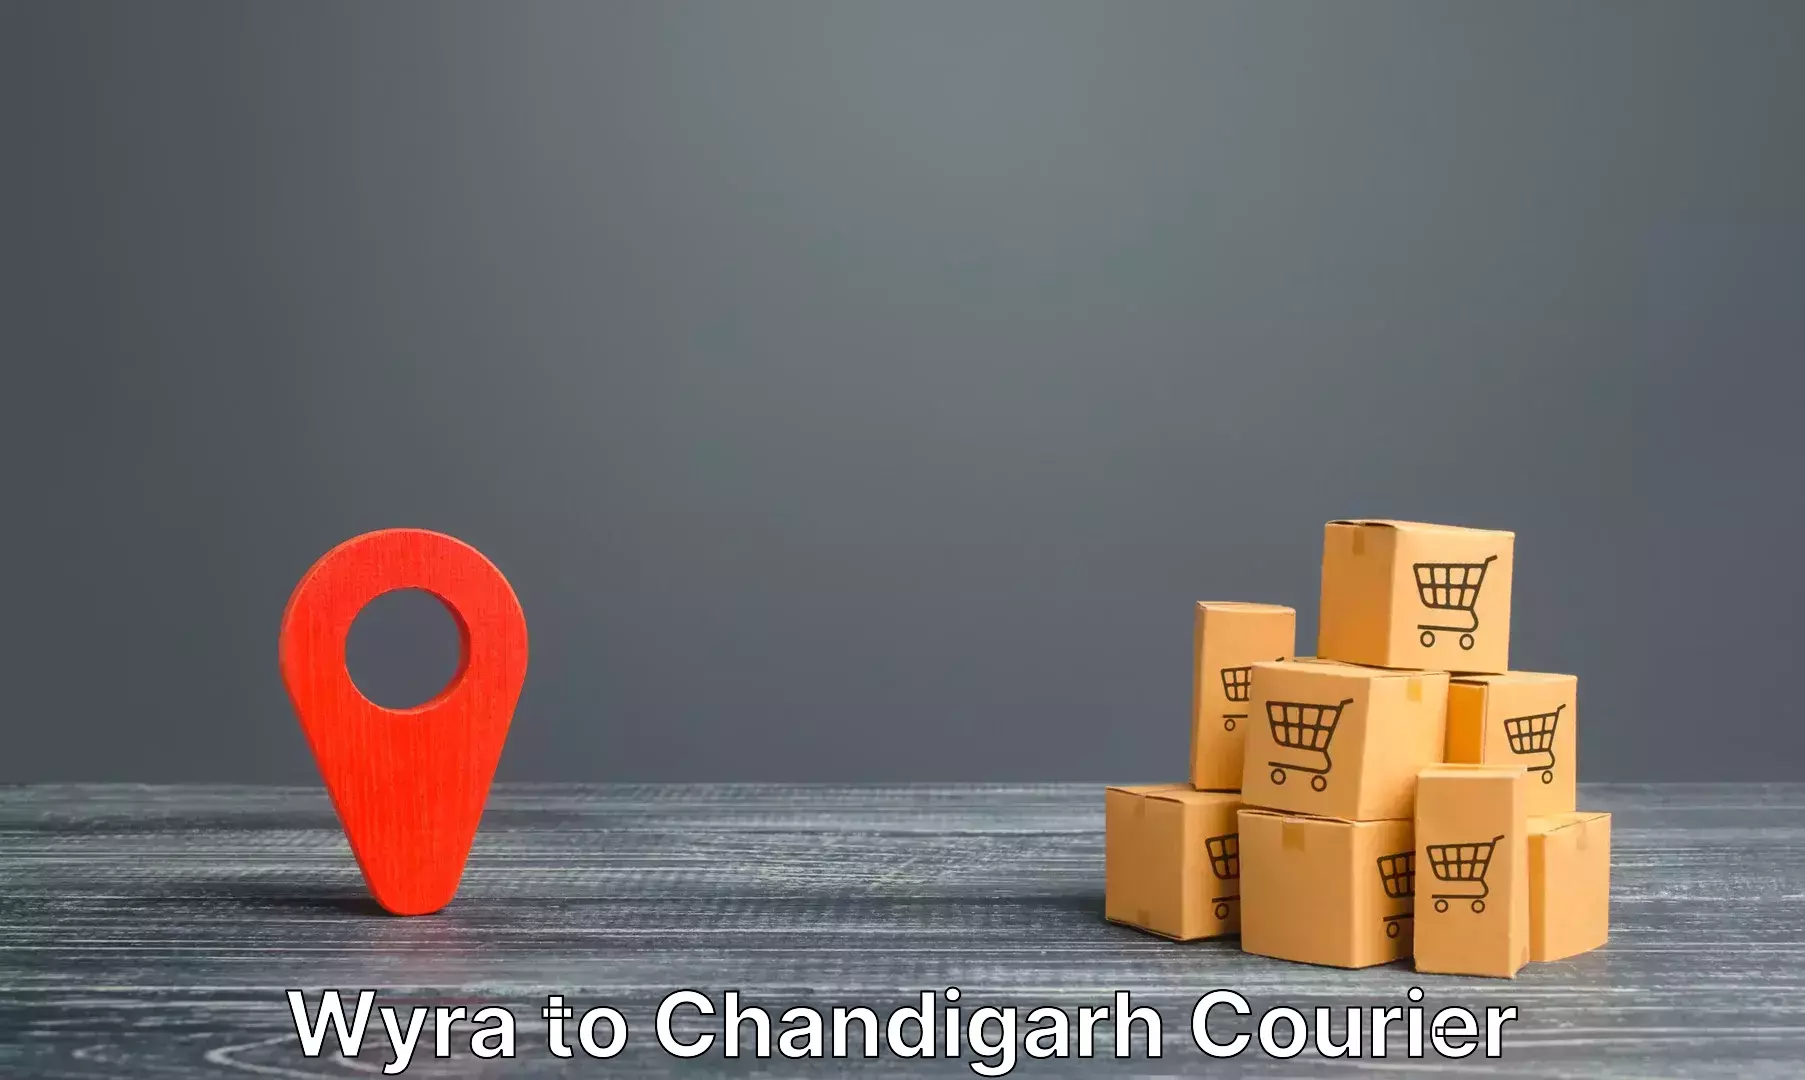 Baggage transport network Wyra to Chandigarh